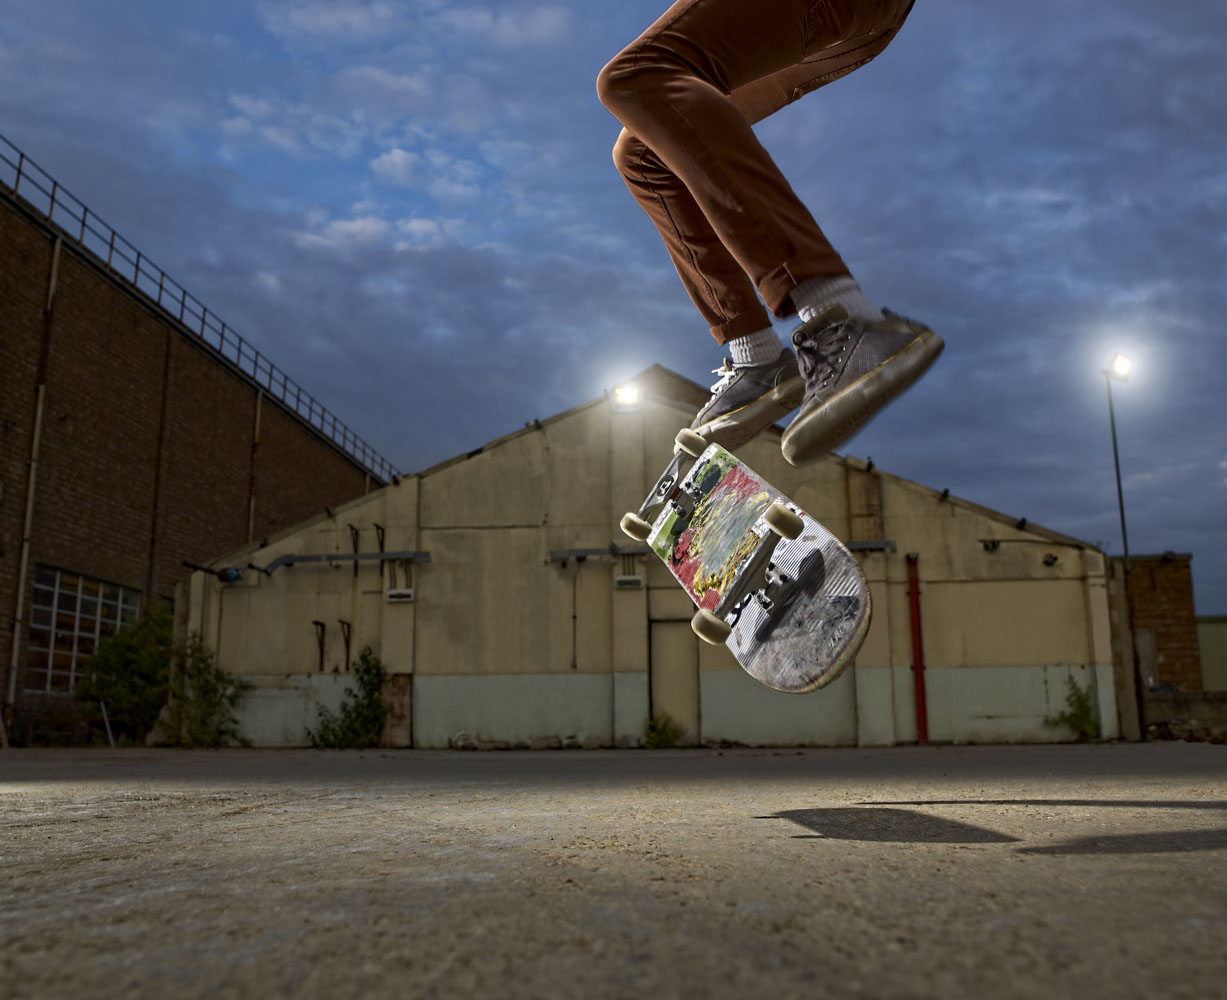 Urban Skateboarder